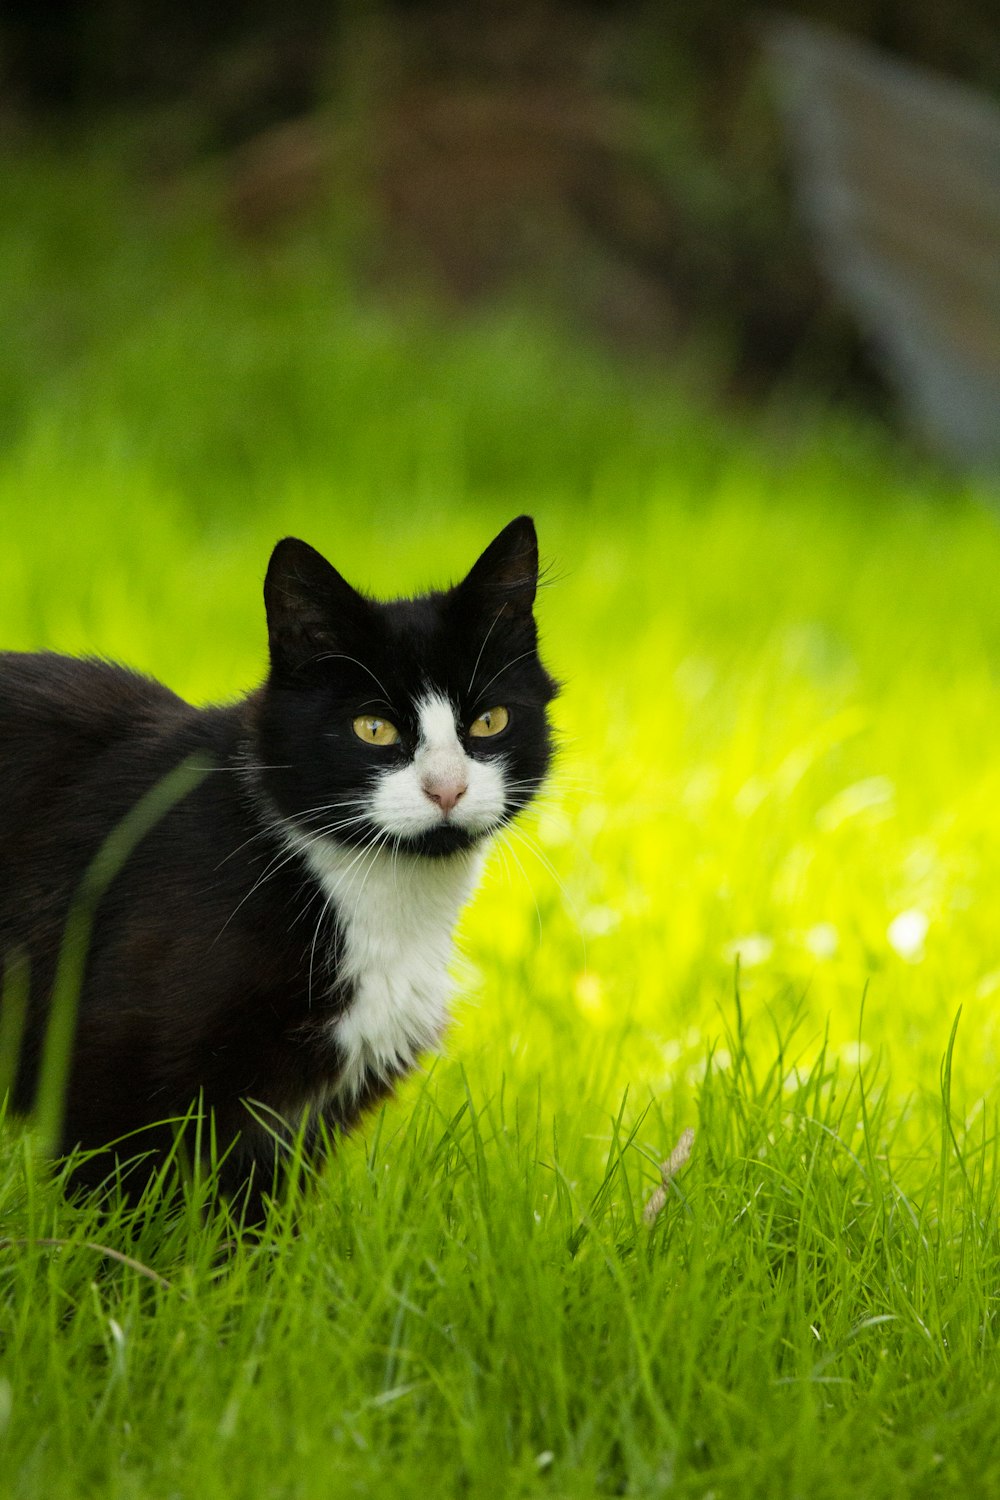 tuxedo cat on green grass during daytime